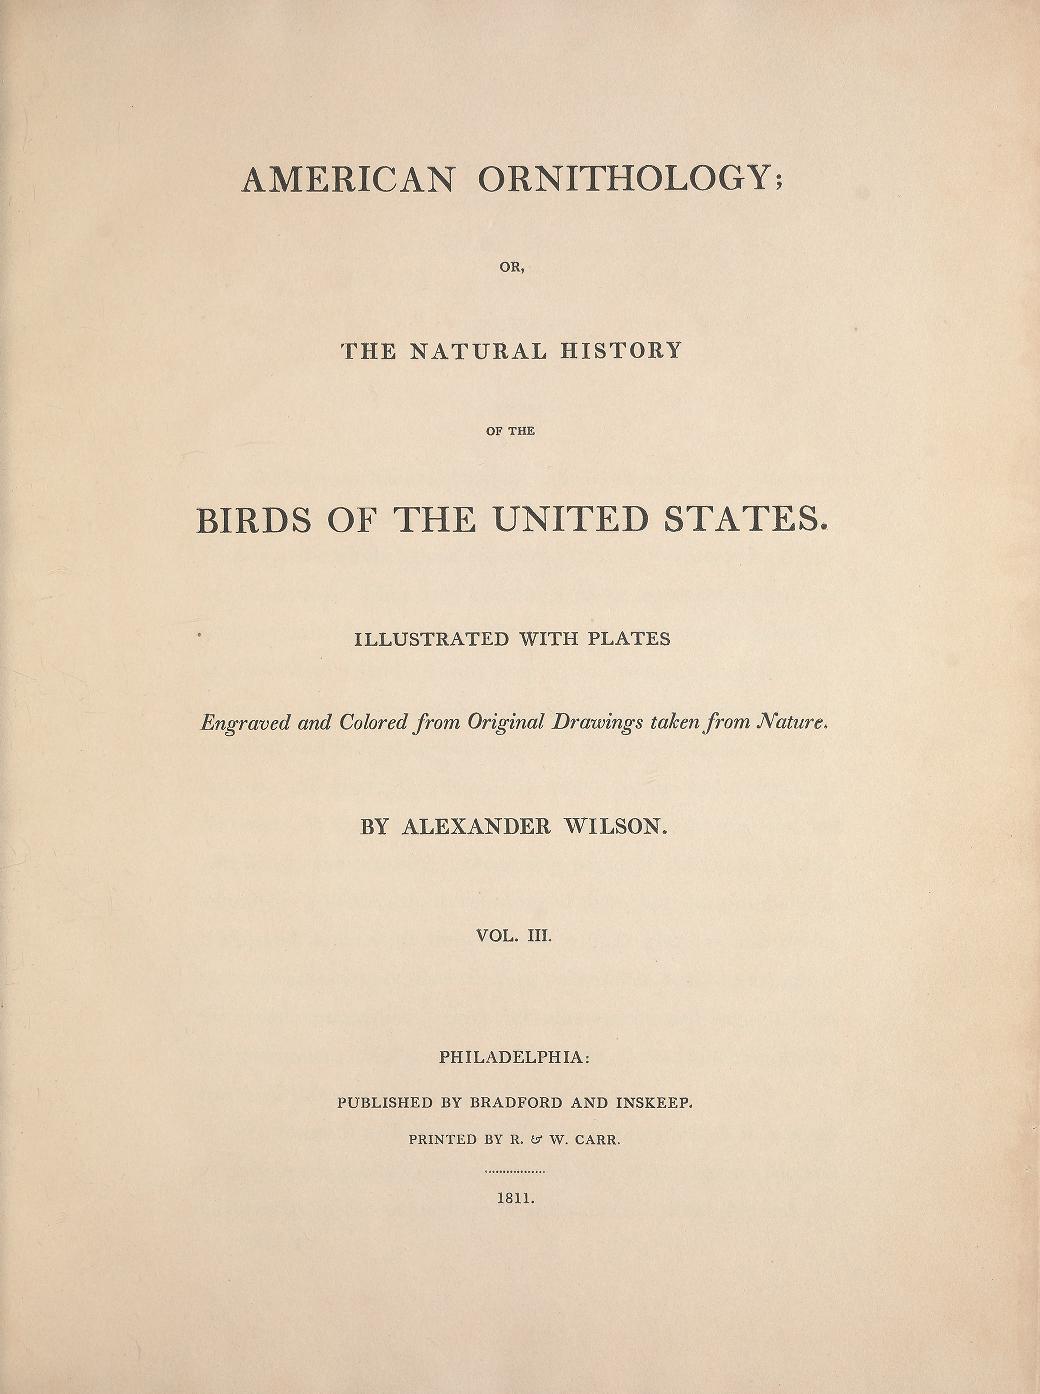 Media type: text; Wilson 1811 Description: American Ornithology (Volume 3);